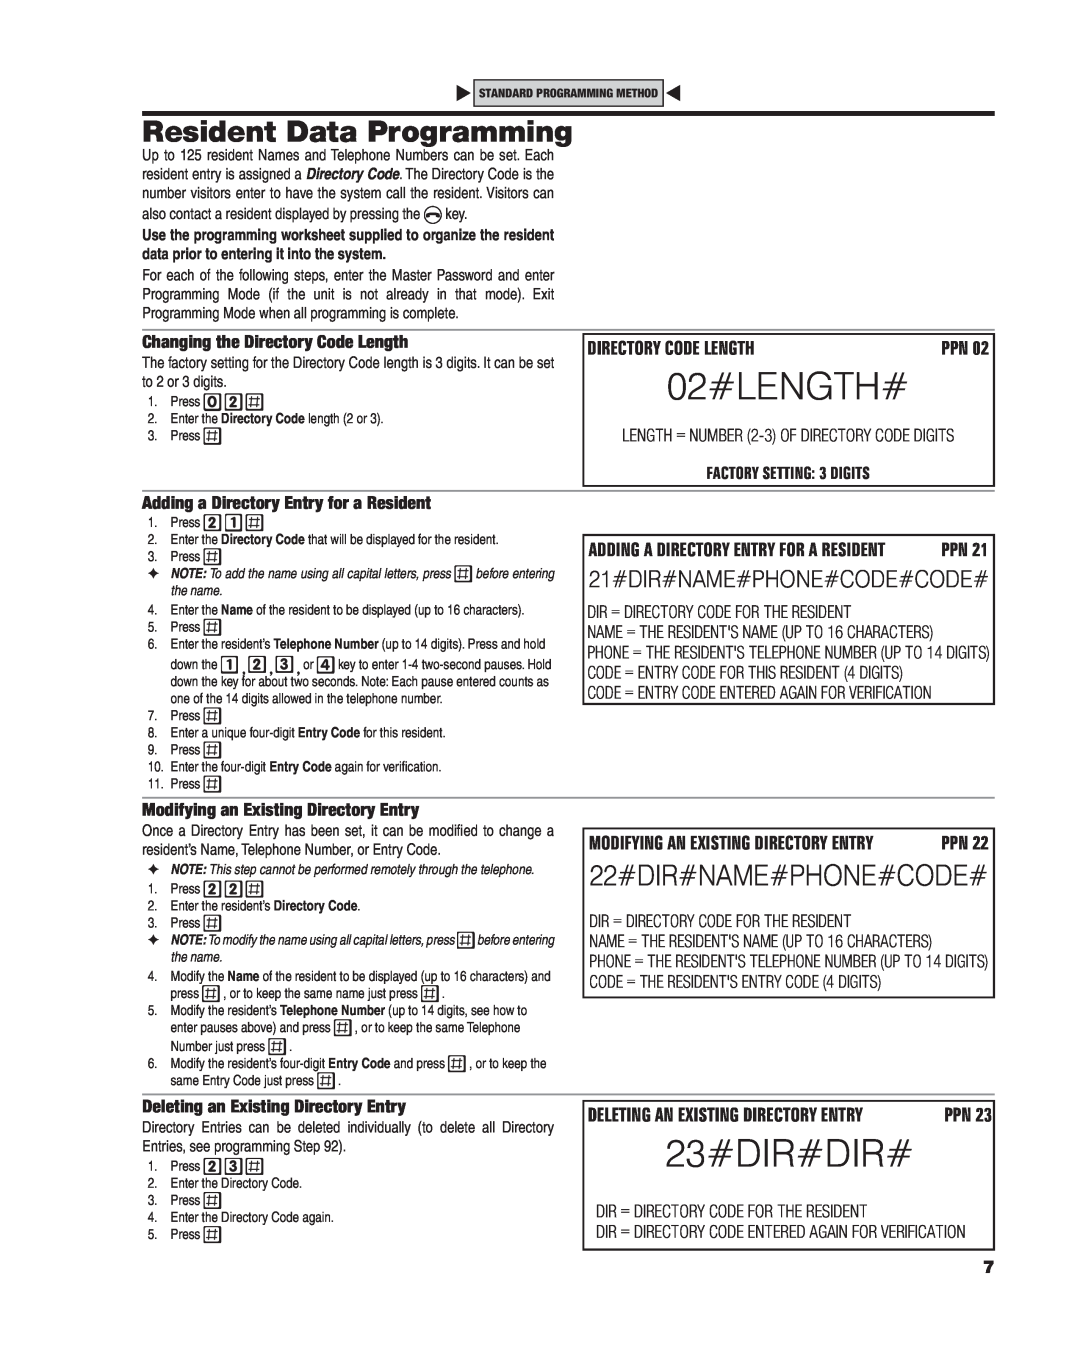 Linear AE-100 manual 02#LENGTH#, 23#DIR#DIR#, Resident Data Programming, Changing the Directory Code Length 